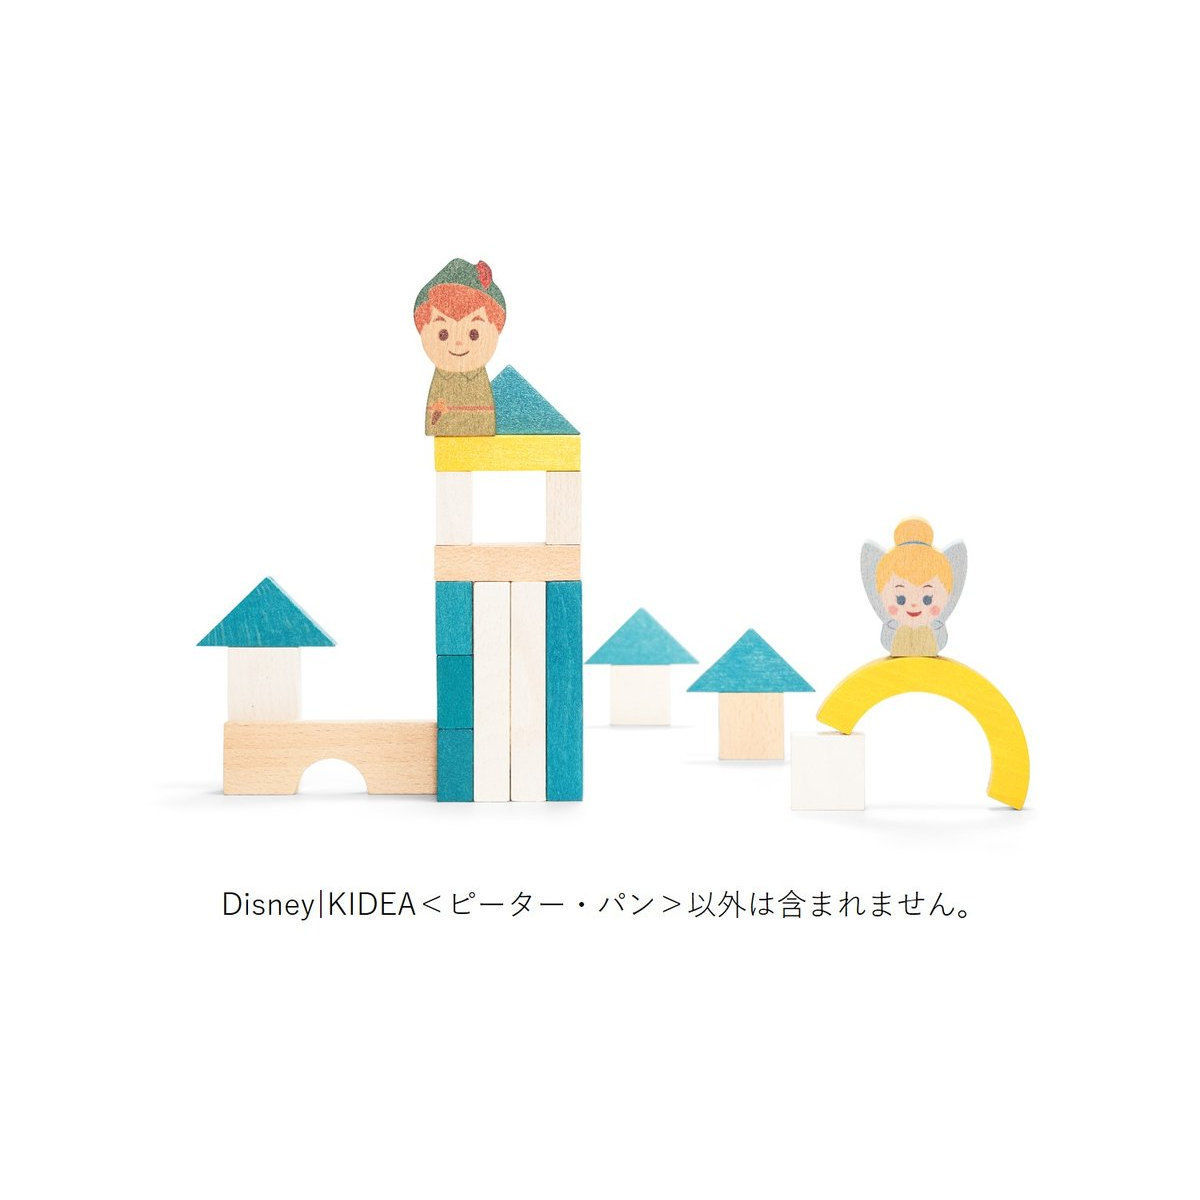 Disney KIDEA＜ピーター・パン＞